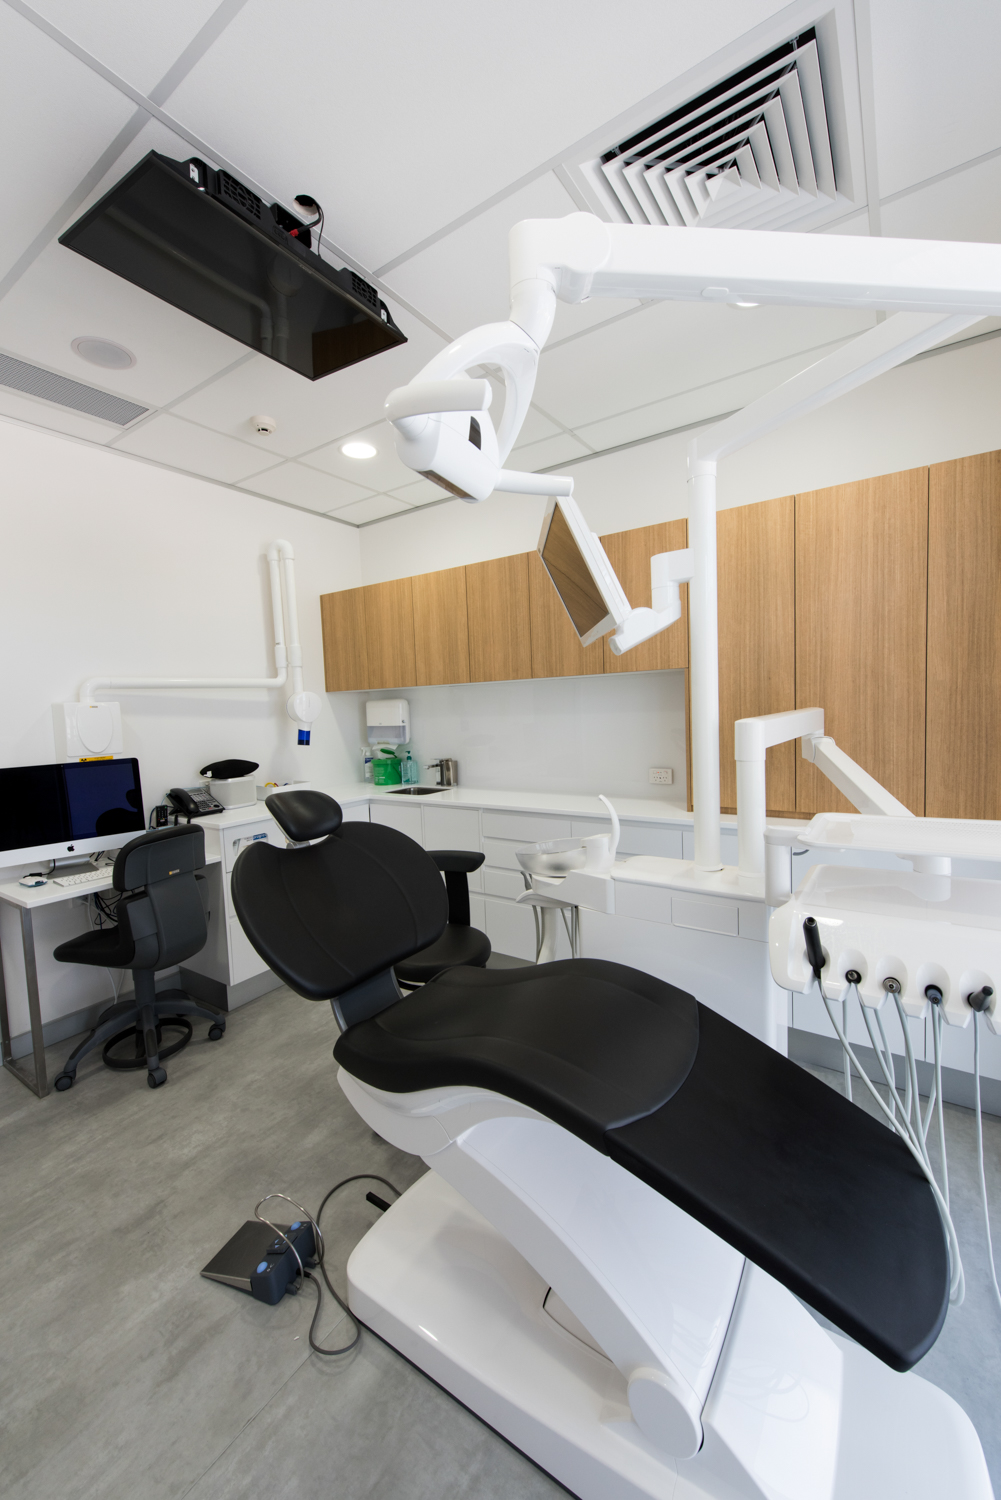 Coomera Dental Centre | dentist | EC Shopping Village, Building D Shop 2/334 Foxwell Rd, Coomera QLD 4209, Australia | 0755804811 OR +61 7 5580 4811